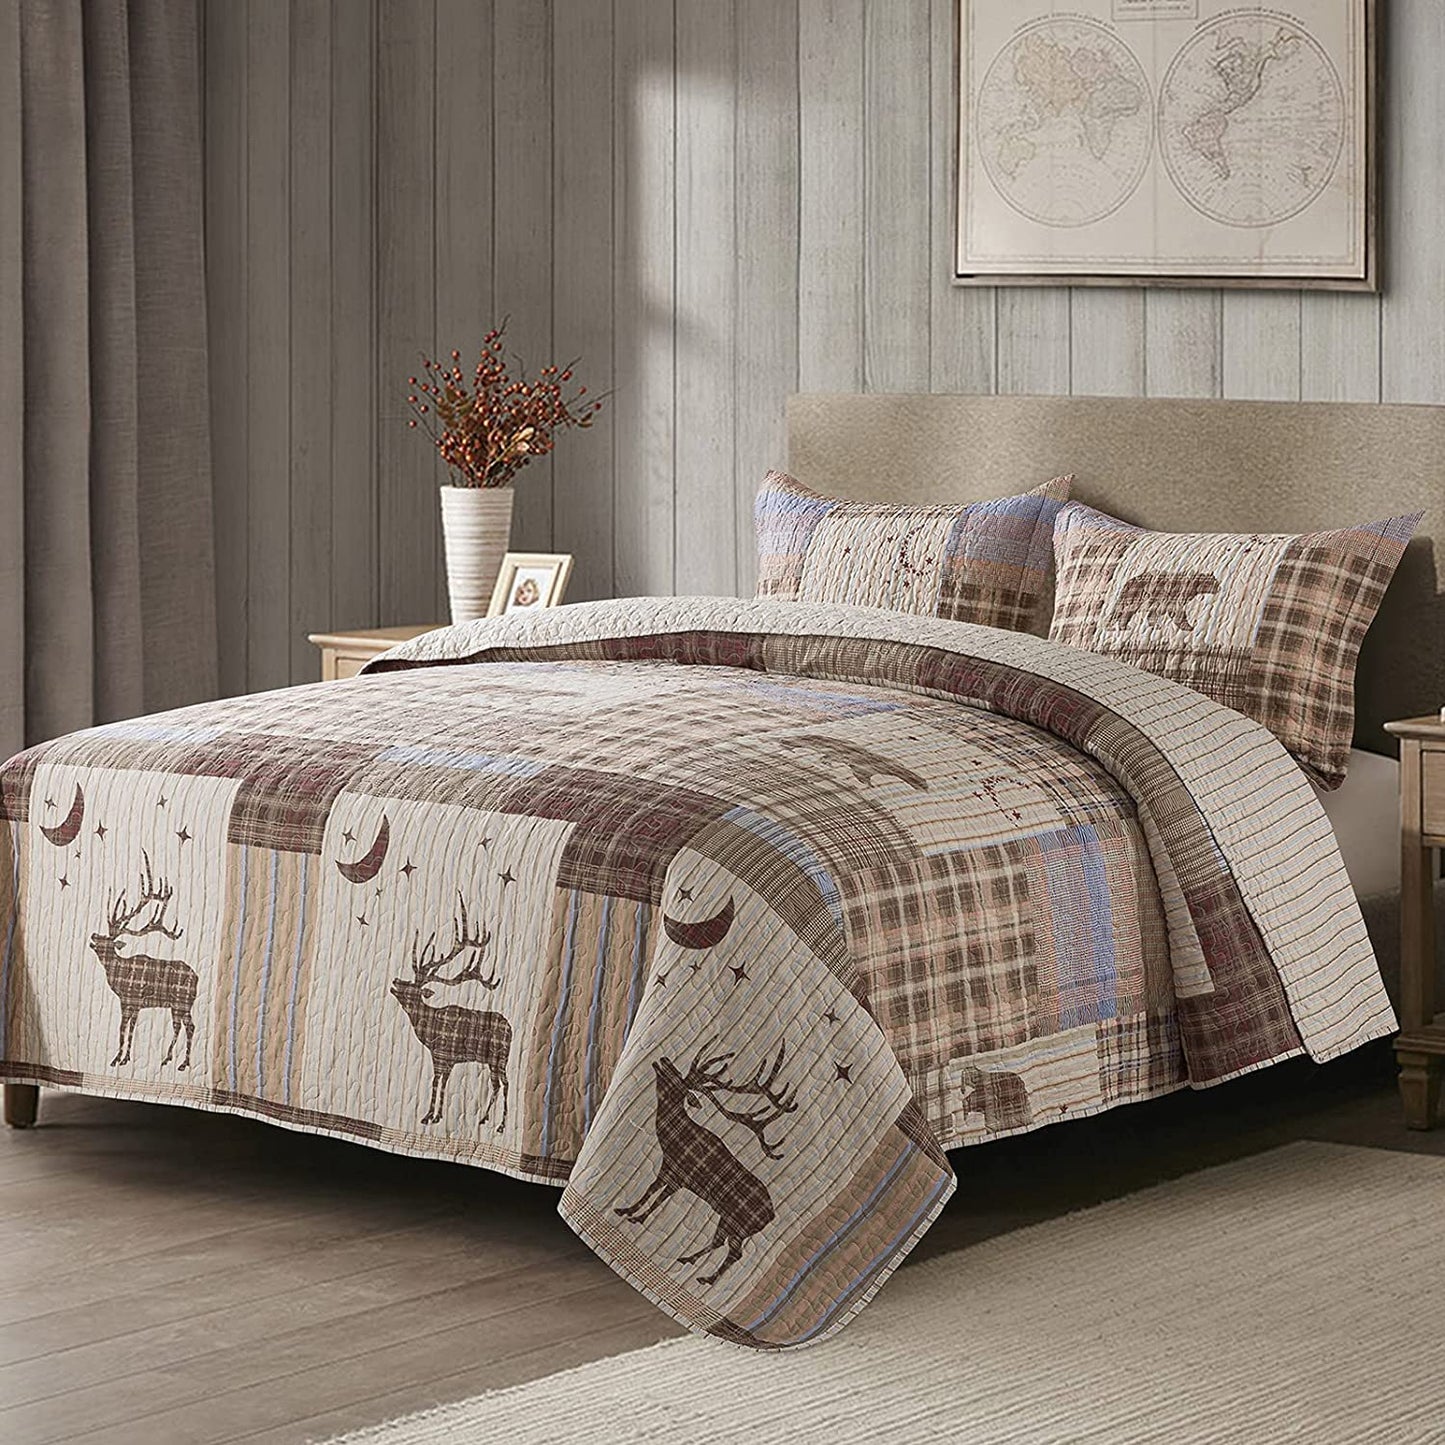 Christmas Bedspread Quilt Set Luxurious Coverlet Warm Bedding Set, Green